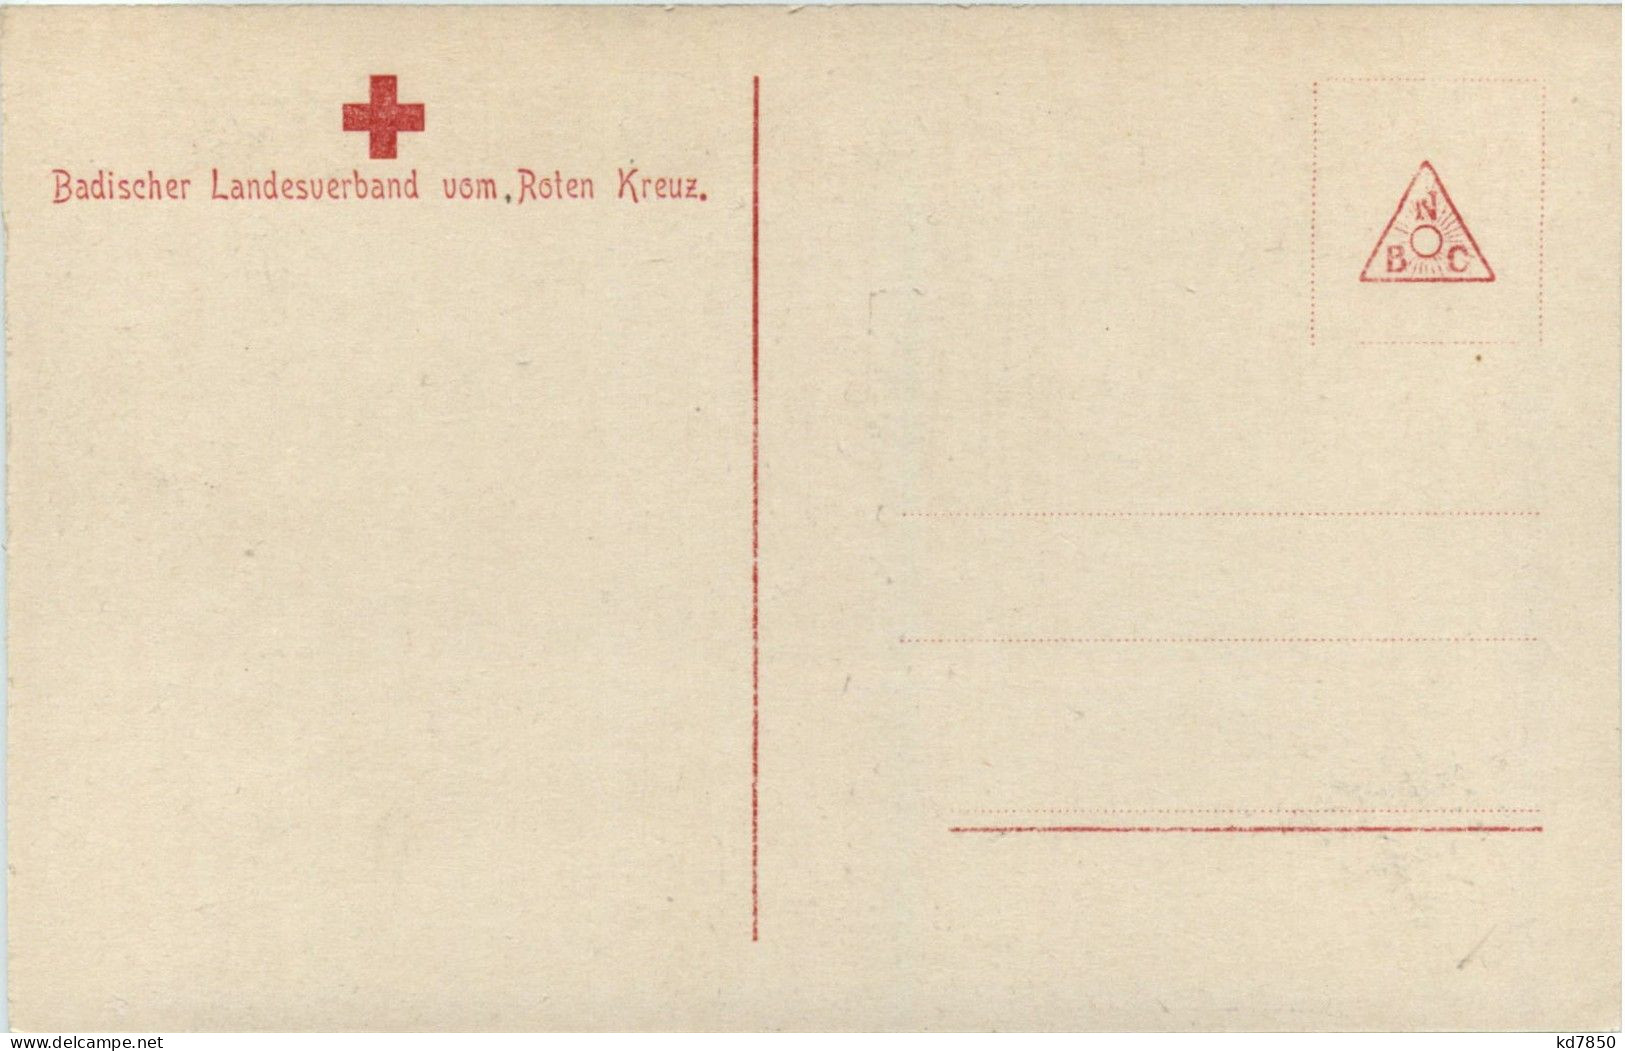 Rotes Kreuz - Red Cross